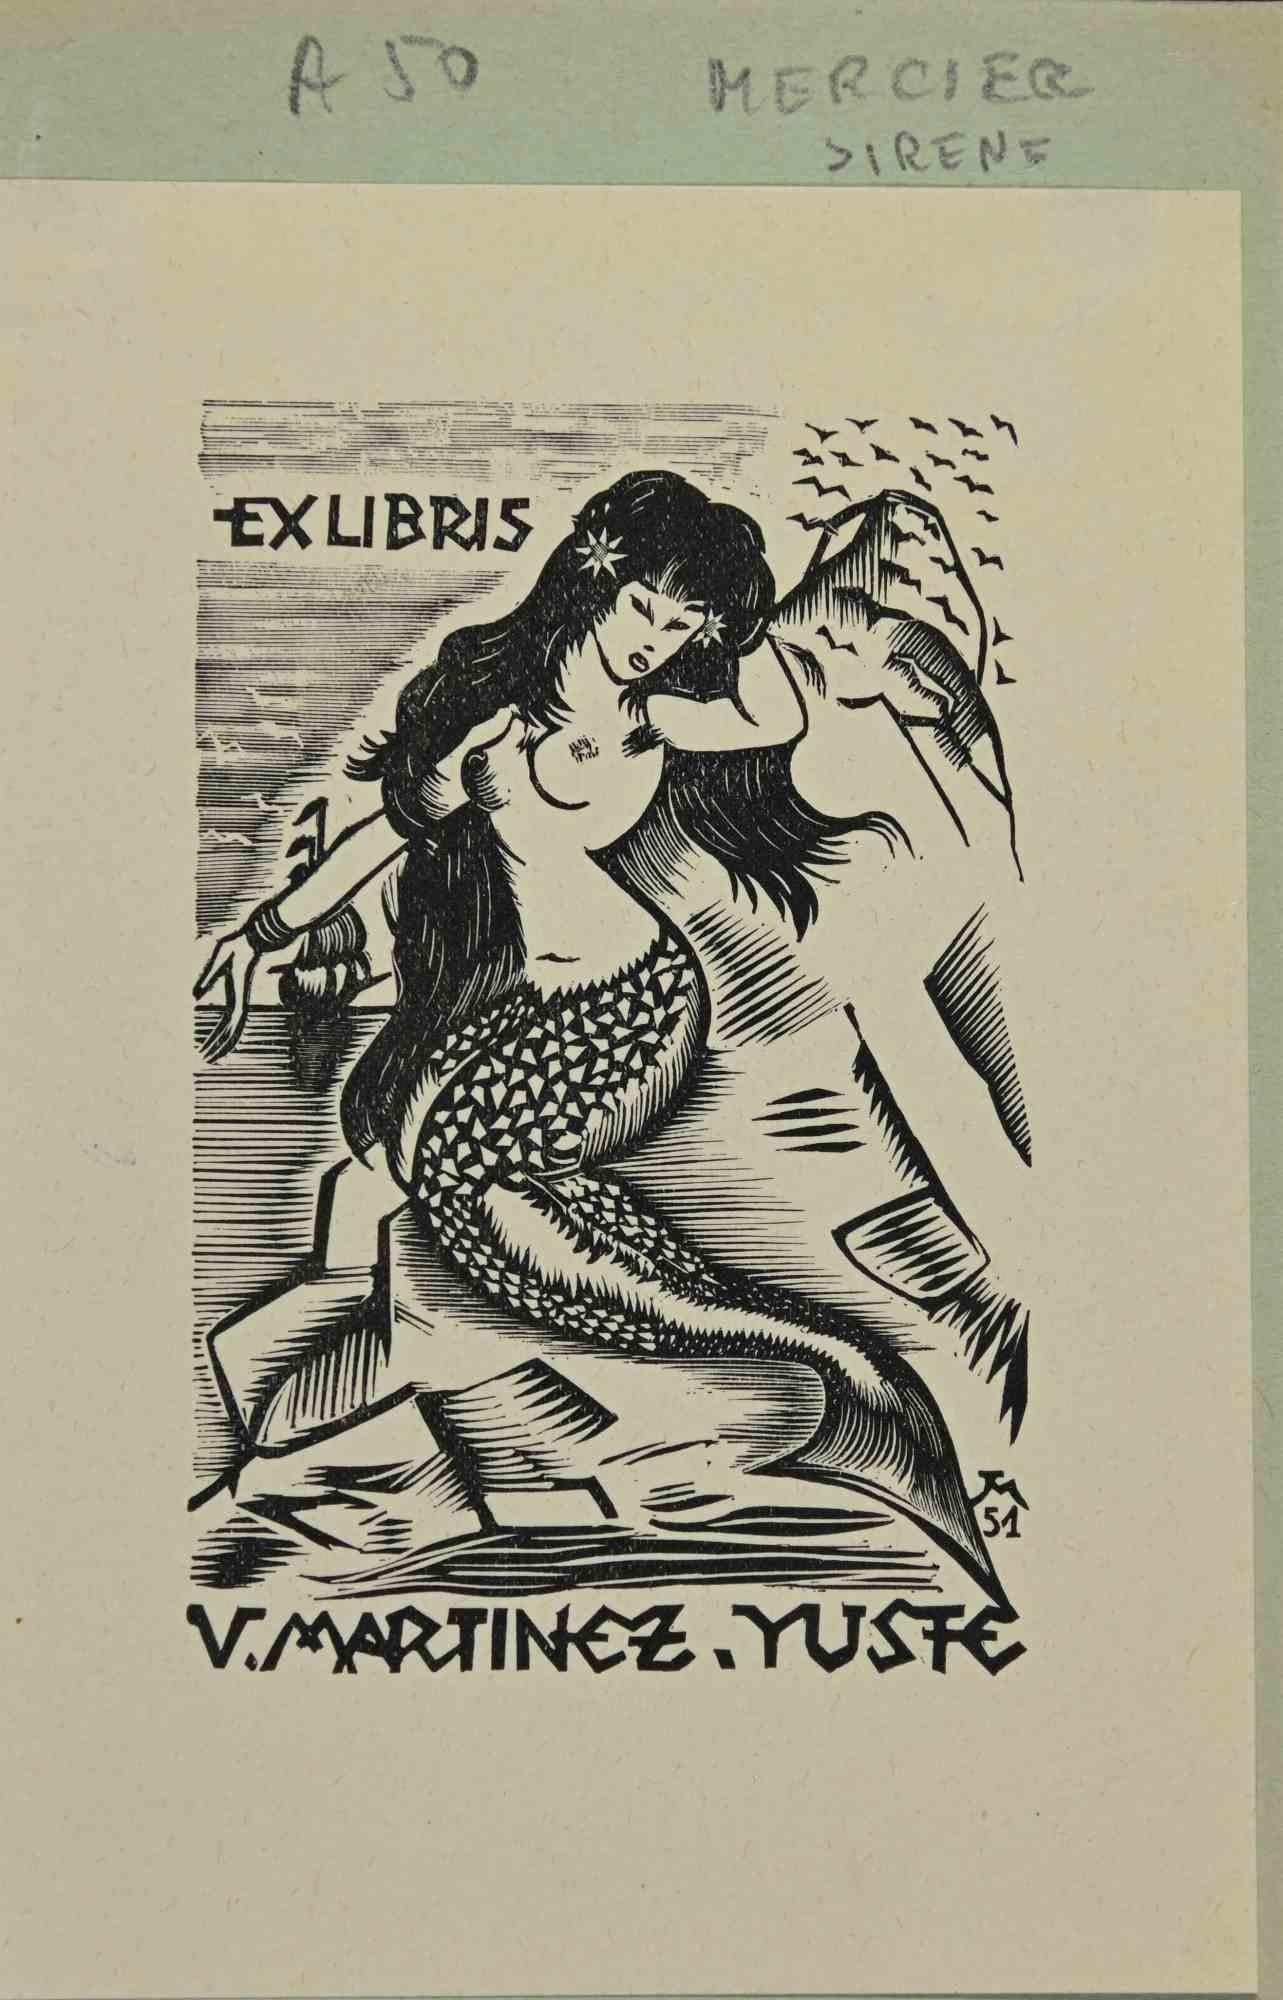 Unknown Figurative Print - Ex Libris - V. Martinez Yuste - Woodcut by Jocelyn Mercier - 1951